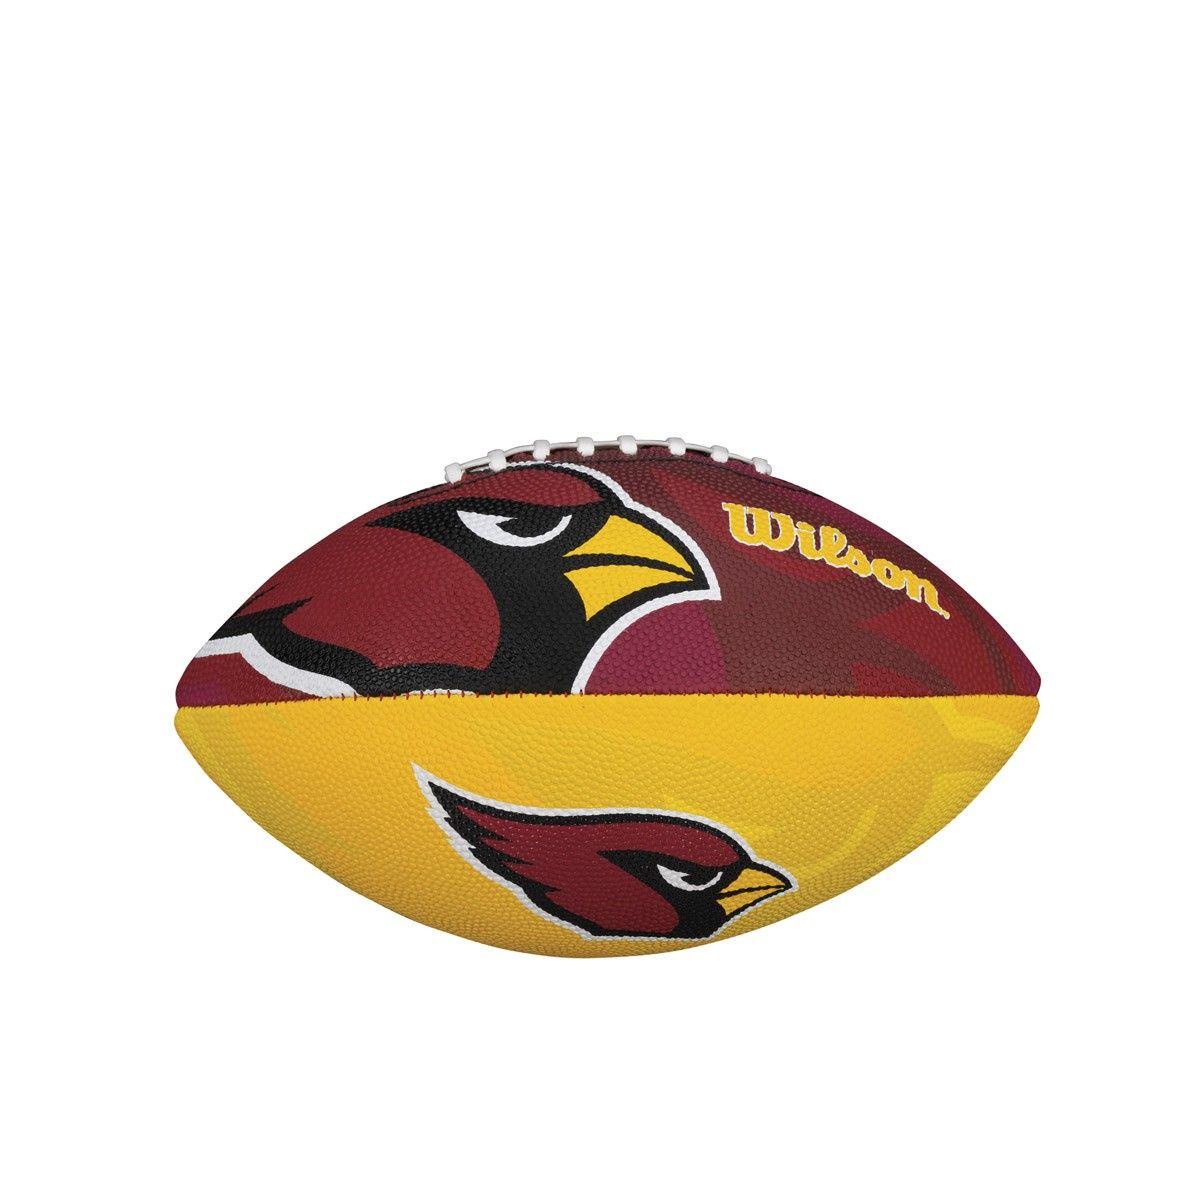 Arizona Football Team Logo - NFL TEAM LOGO JUNIOR SIZE FOOTBALL CARDINALS. Wilson